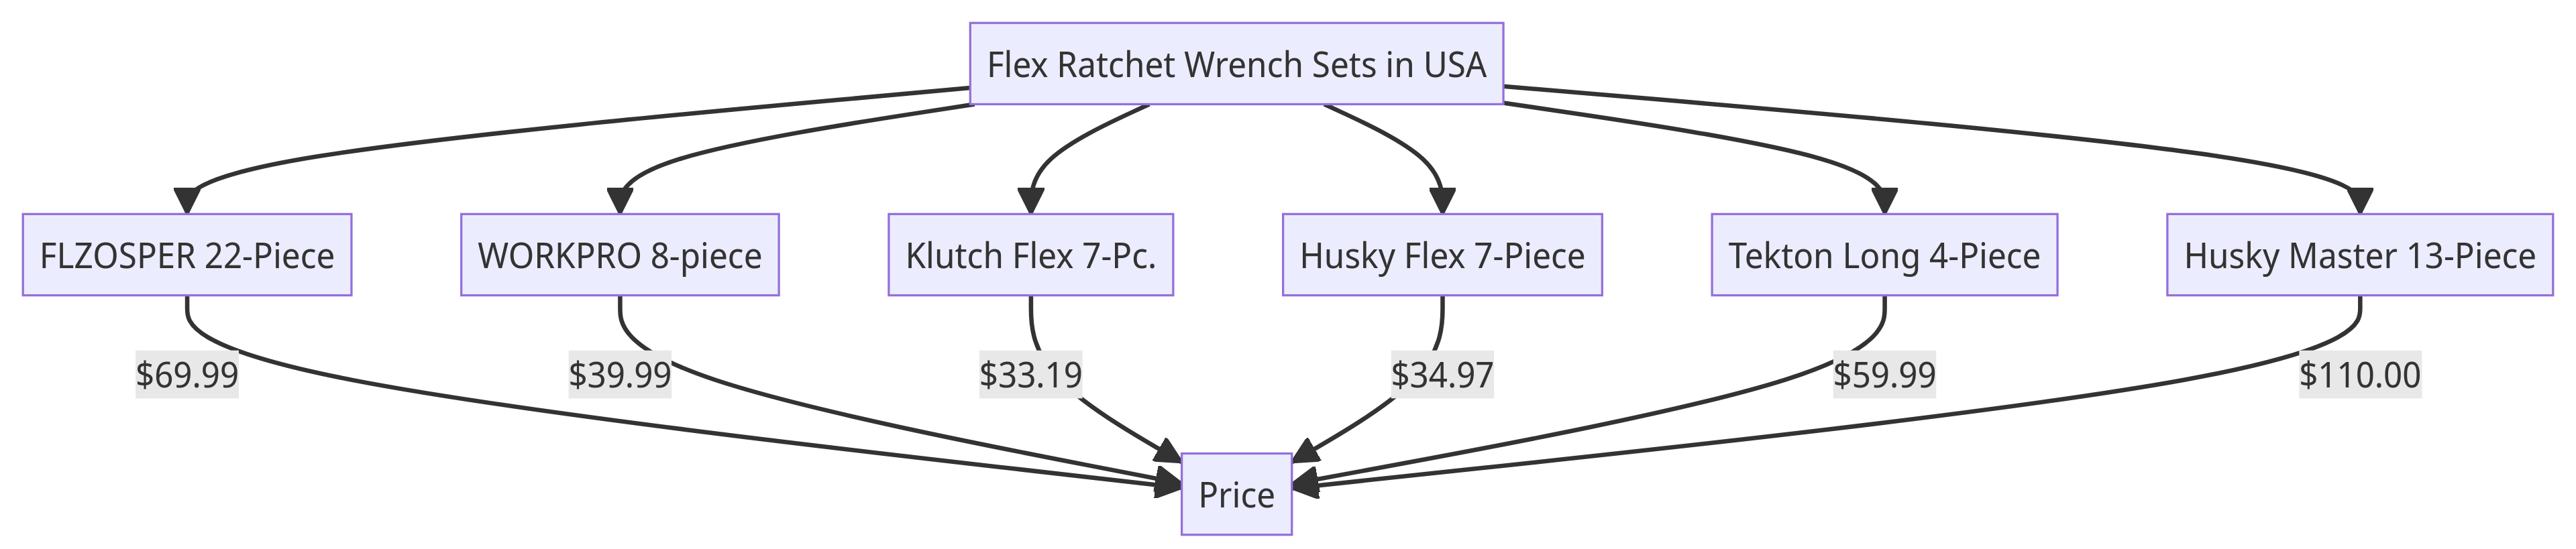 Flow Chart of Flex Ratchet Wrench Sets